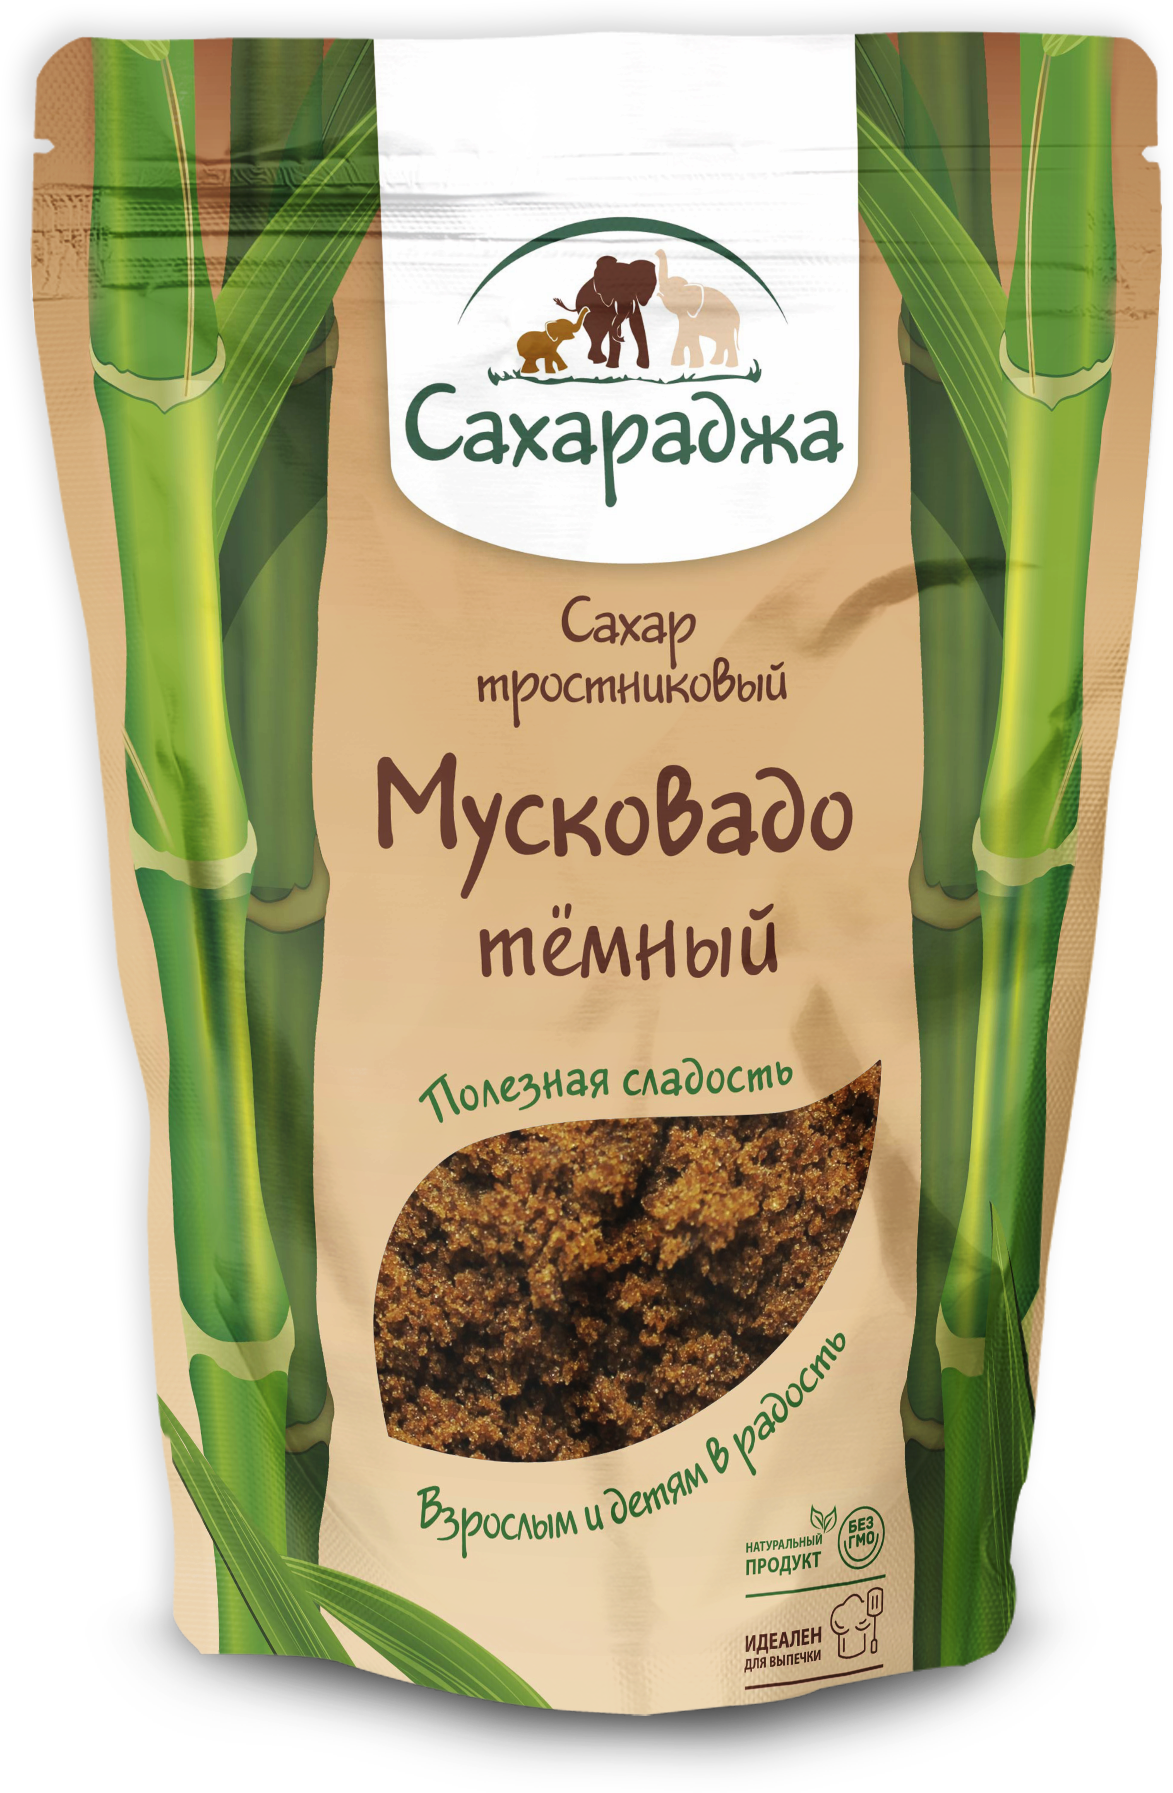 Сахар тростниковый Мусковадо тёмный "Сахараджа" 450 гр.